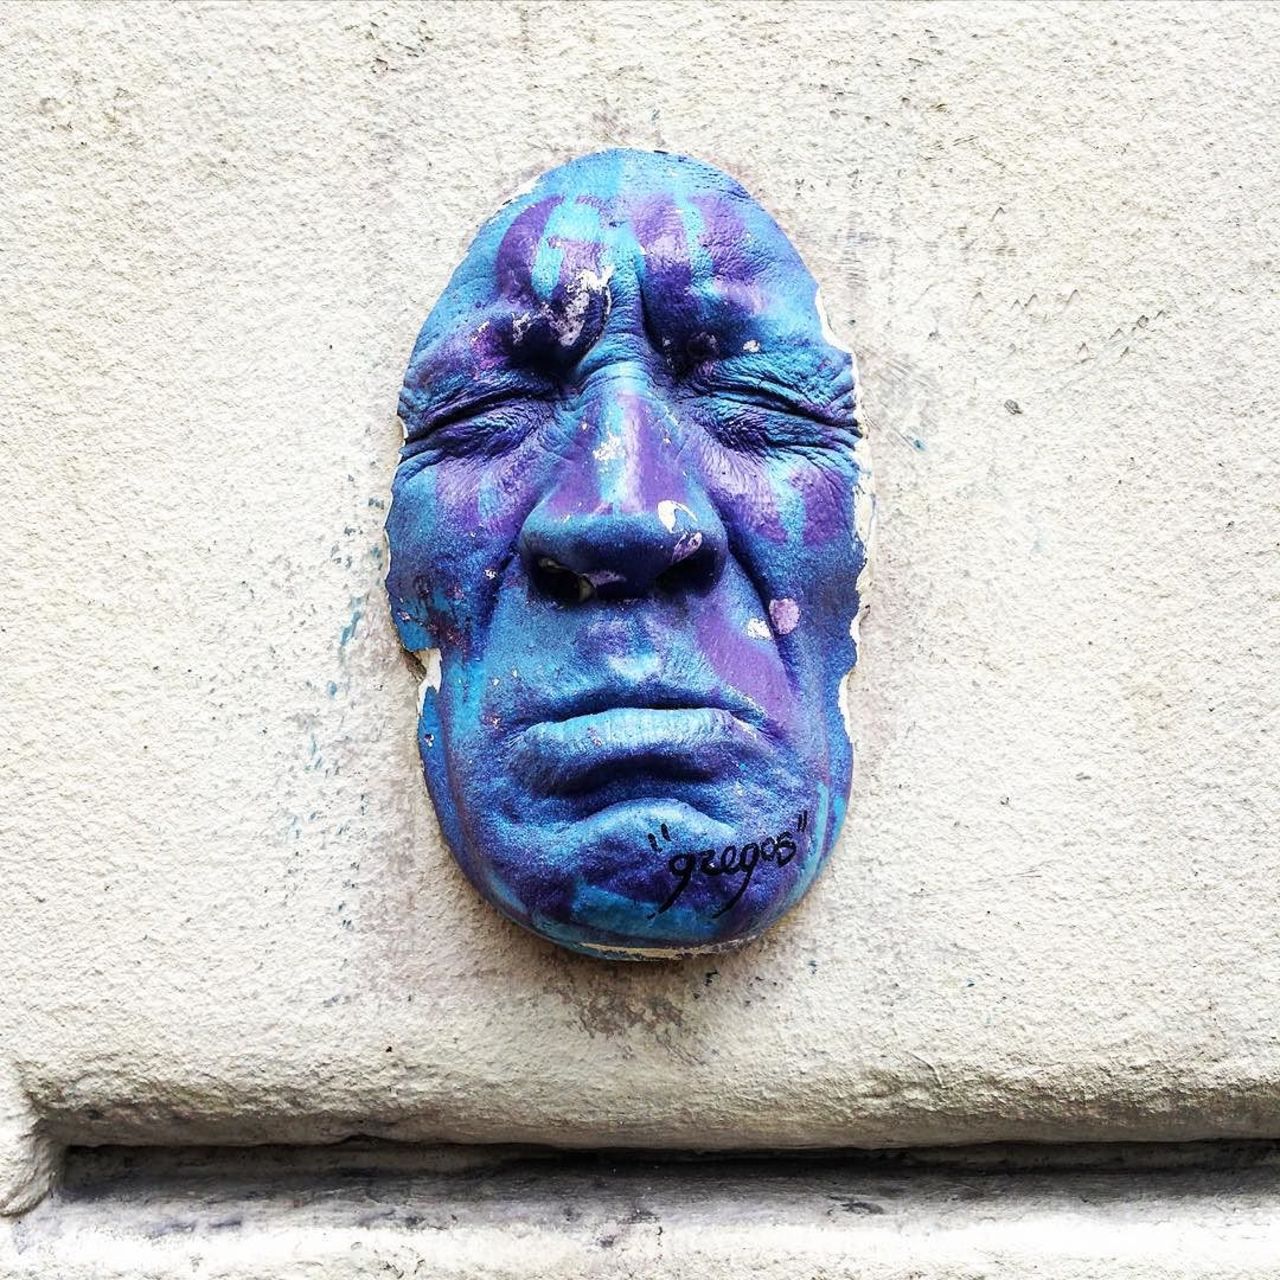 circumjacent_fr: #Paris #graffiti photo by julosteart http://ift.tt/1GZMz6t #StreetArt https://t.co/B4SklJmS7U